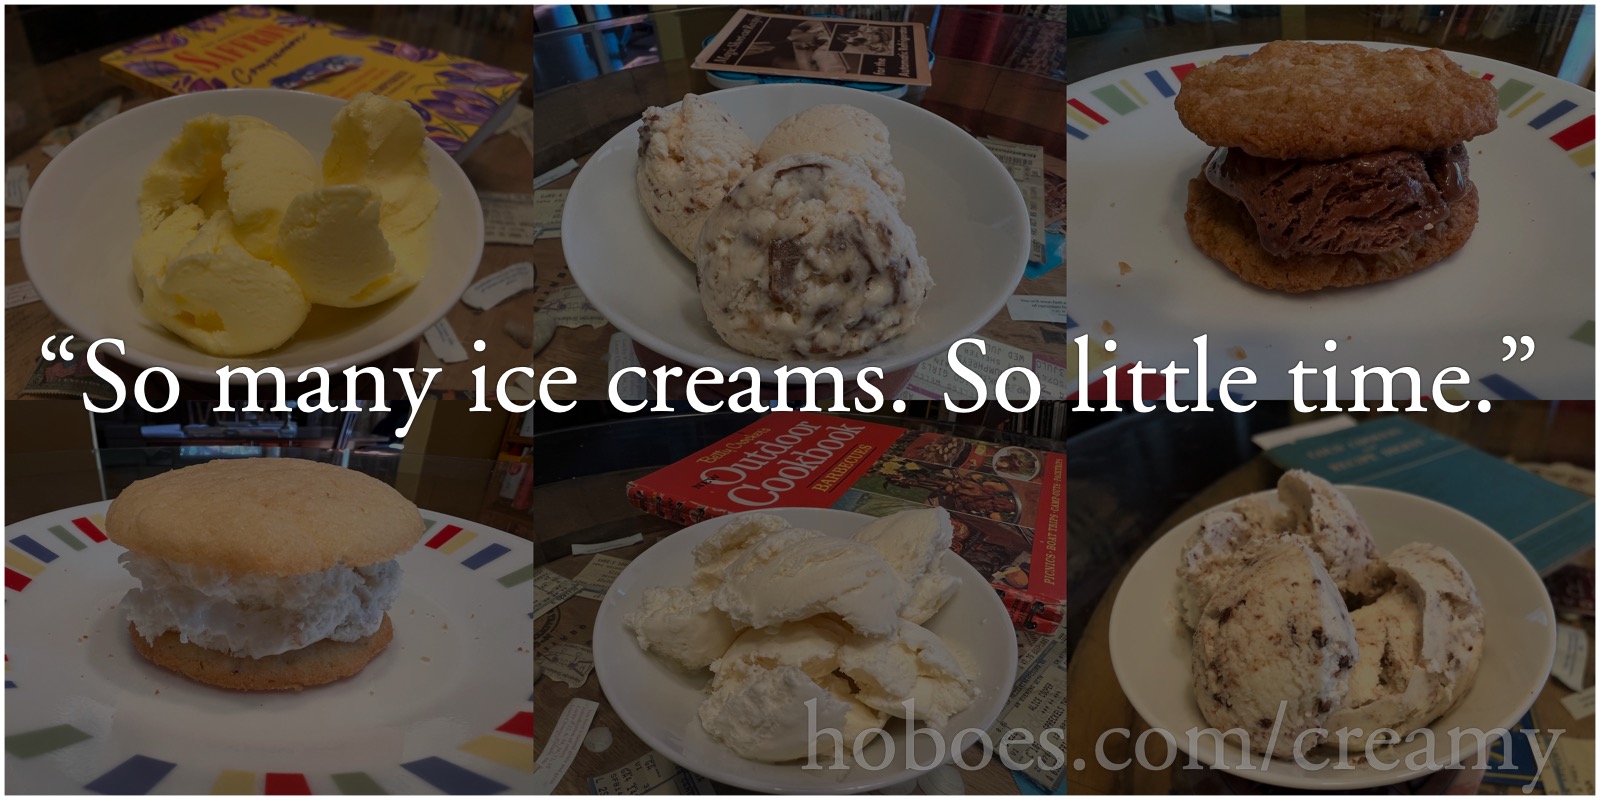 So many ice creams: “So many ice creams. So little time.”; ice cream